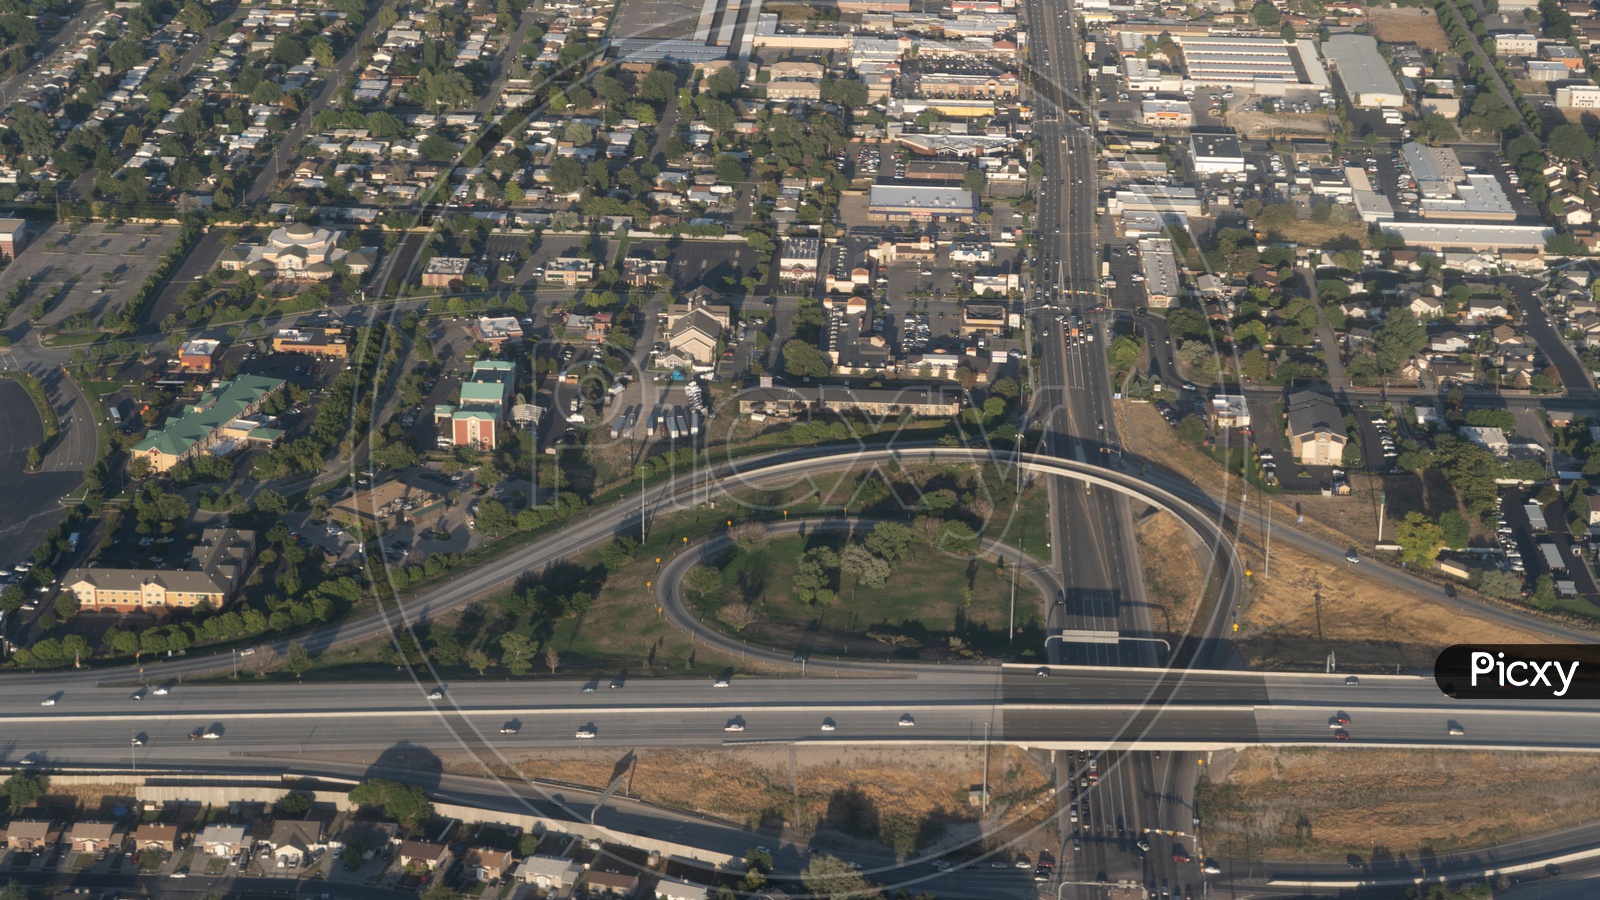 Birdseye view of the Urban highways of Salt Lake City